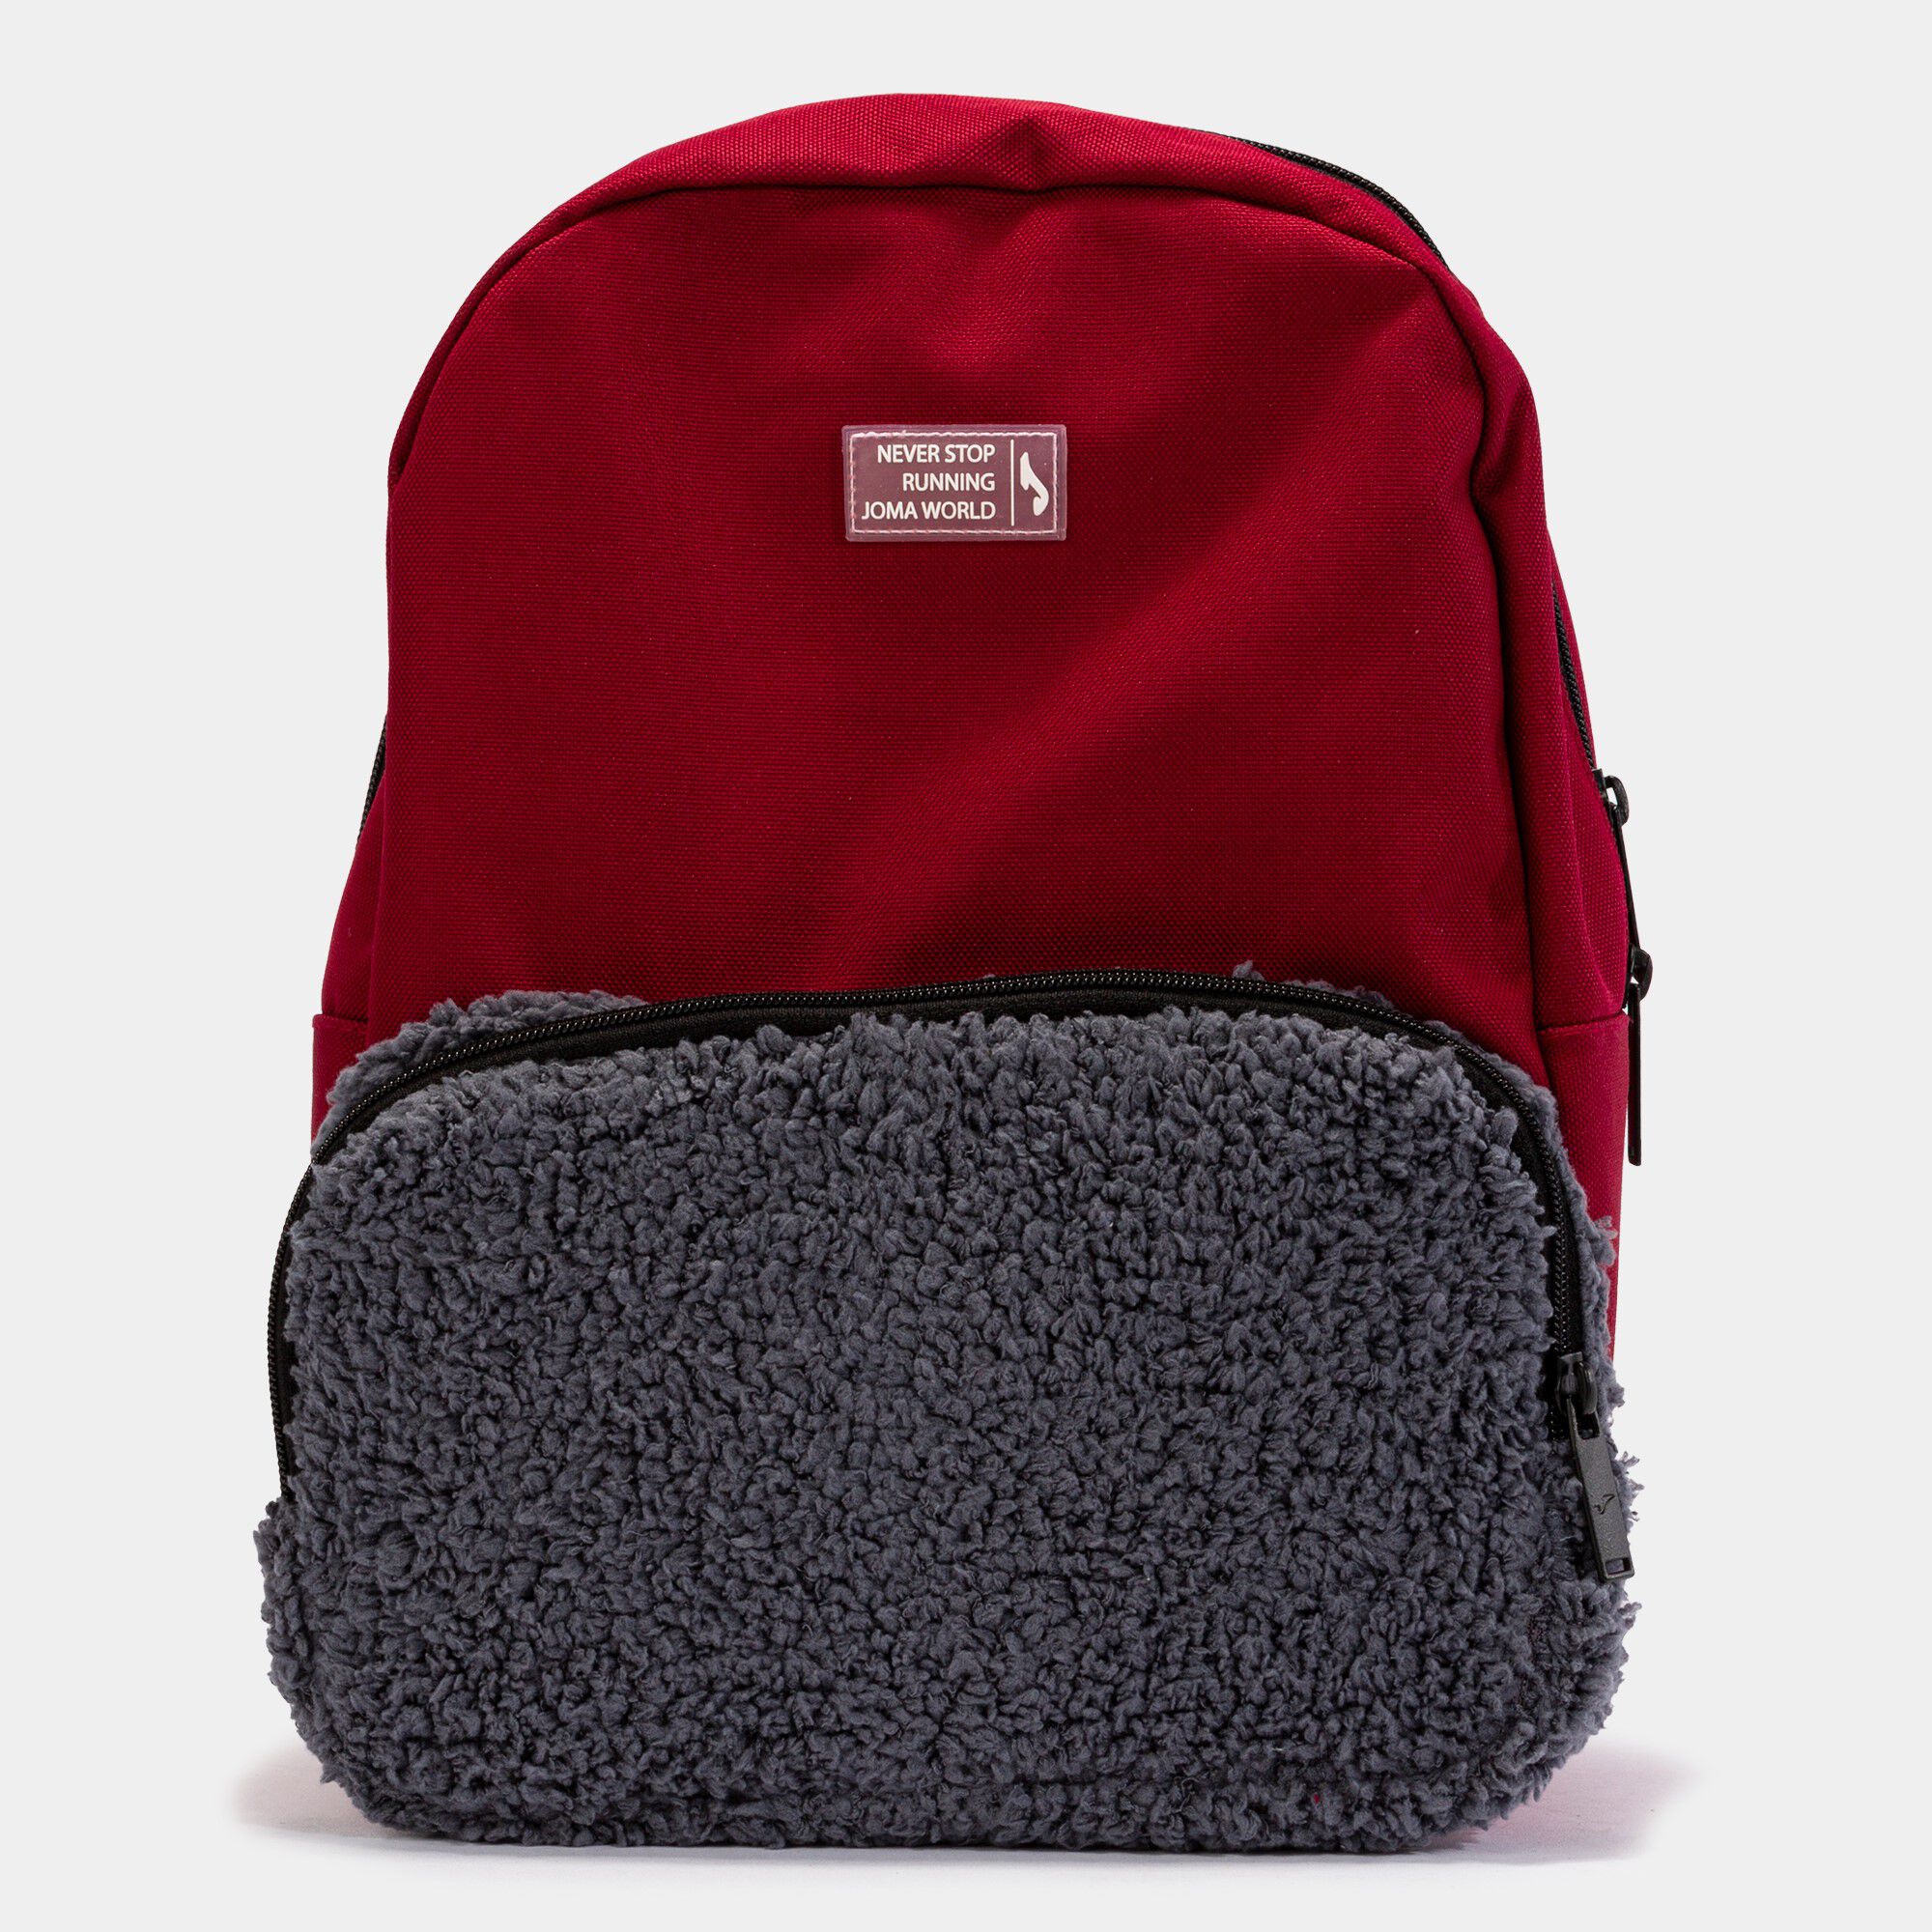 Backpack - shoe bag Friendly burgundy